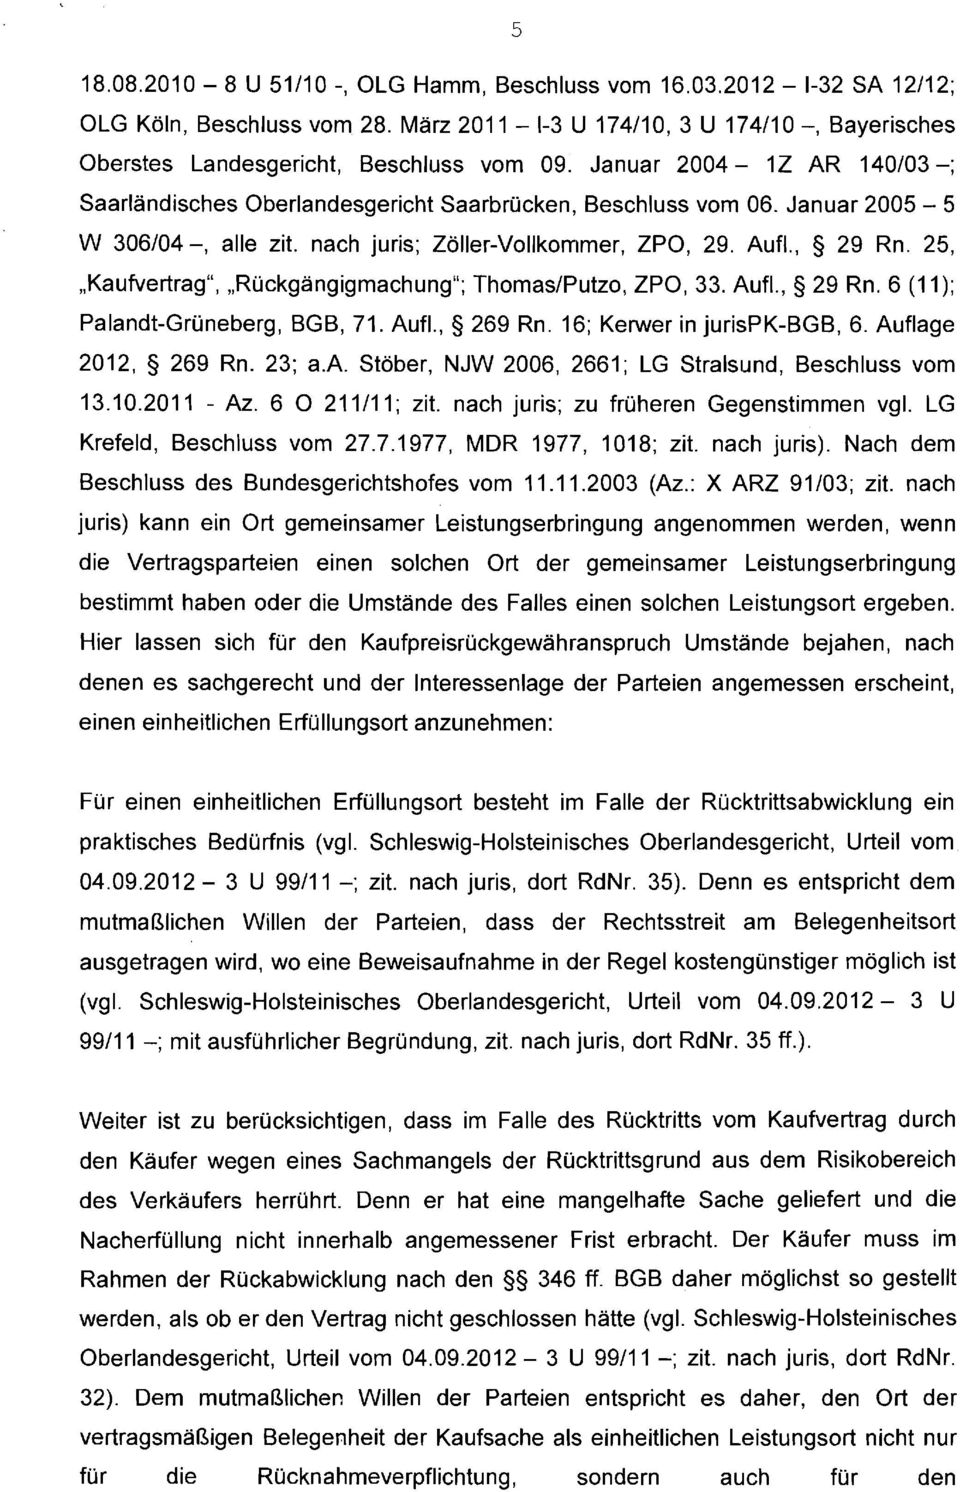 25,,,Kaufvertragu, Rückgängigmachungfi; Thomas/Putzo, ZPO, 33. Aufl., 5 29 Rn. 6 (11); Palandt-Grüneberg, BGB, 71. Aufl., 5 269 Rn. 16; Kerwer in jurispk-bgb, 6. Auflage 2012, 5 269 Rn. 23; a.a. Stöber, NJW 2006, 2661; LG Straisund, Beschluss vom 13.